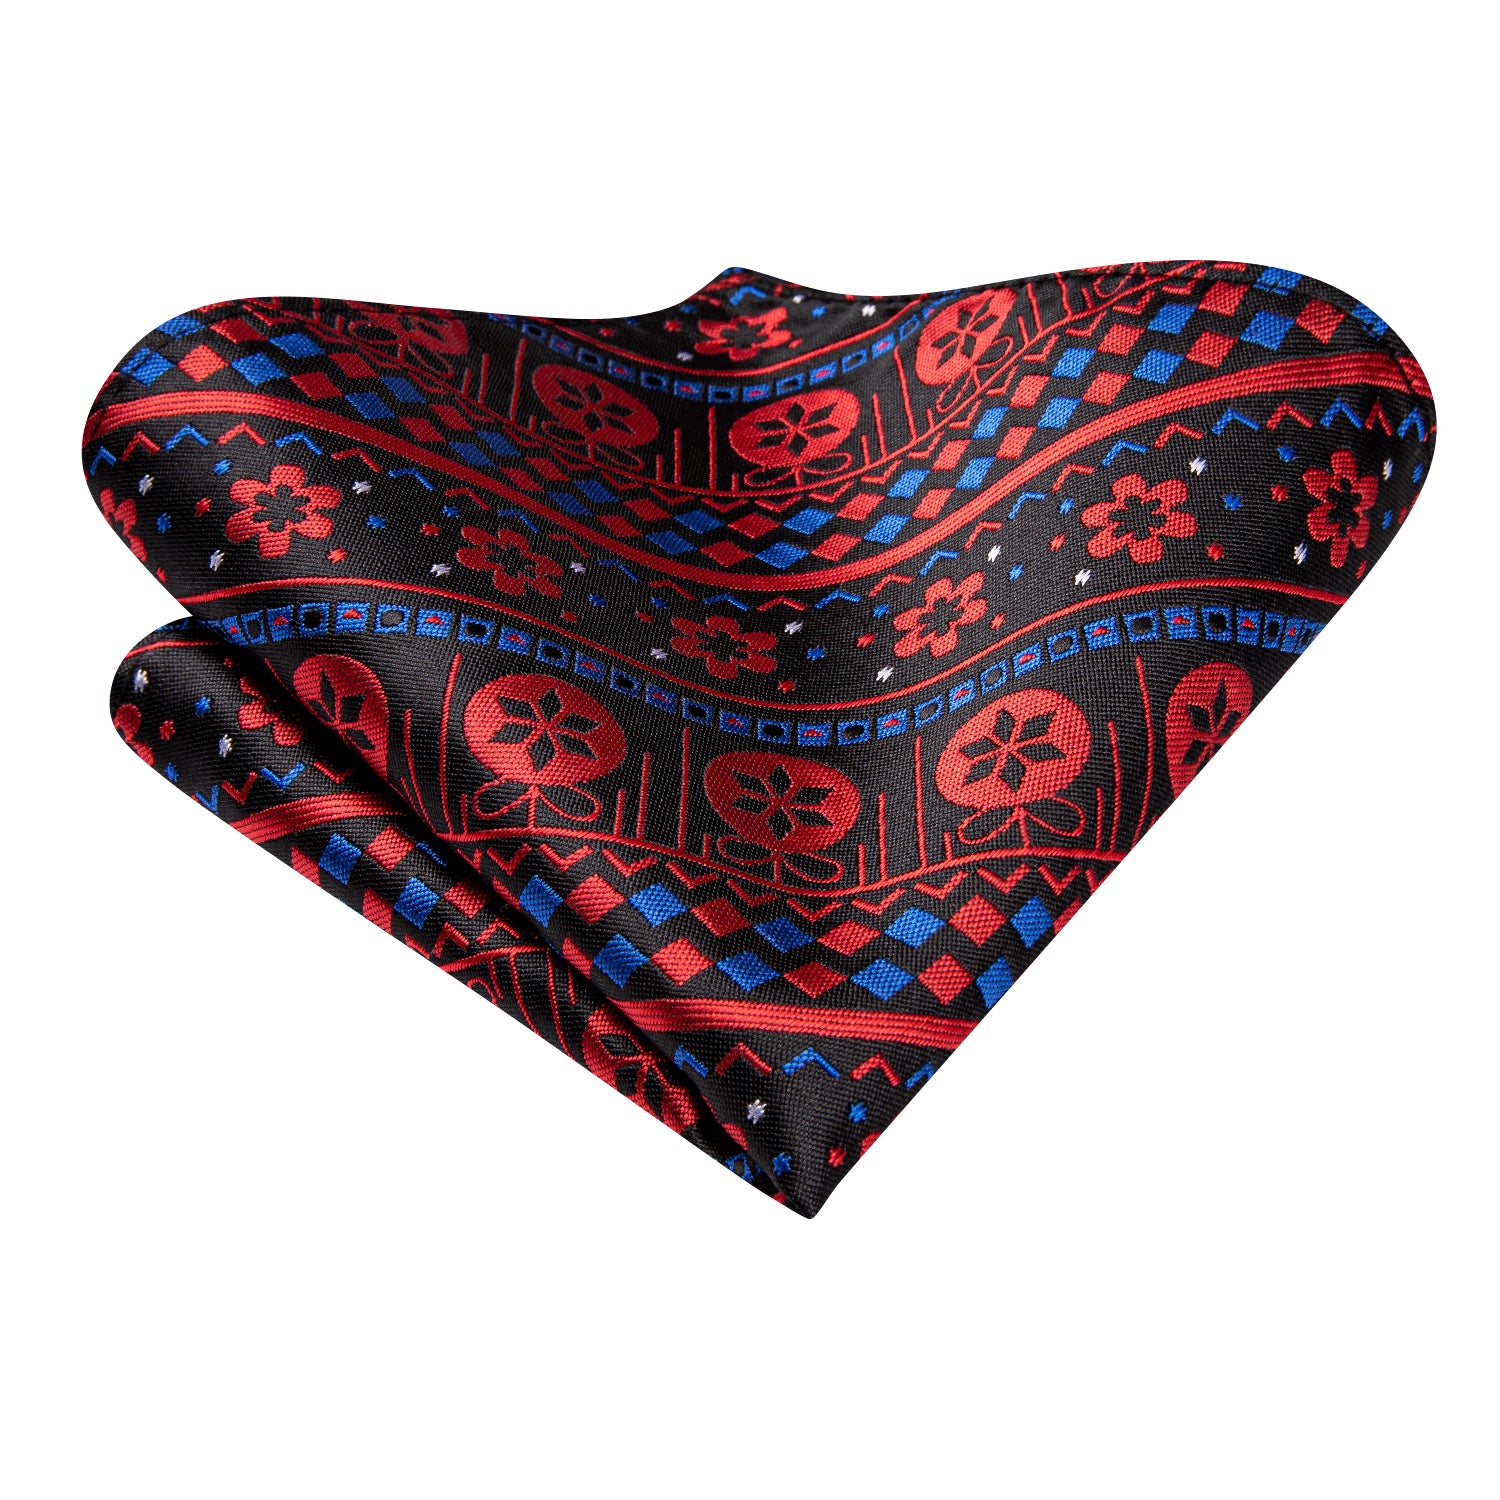 Christmas Black Red Novelty Men's Tie Pocket Square Cufflinks Set